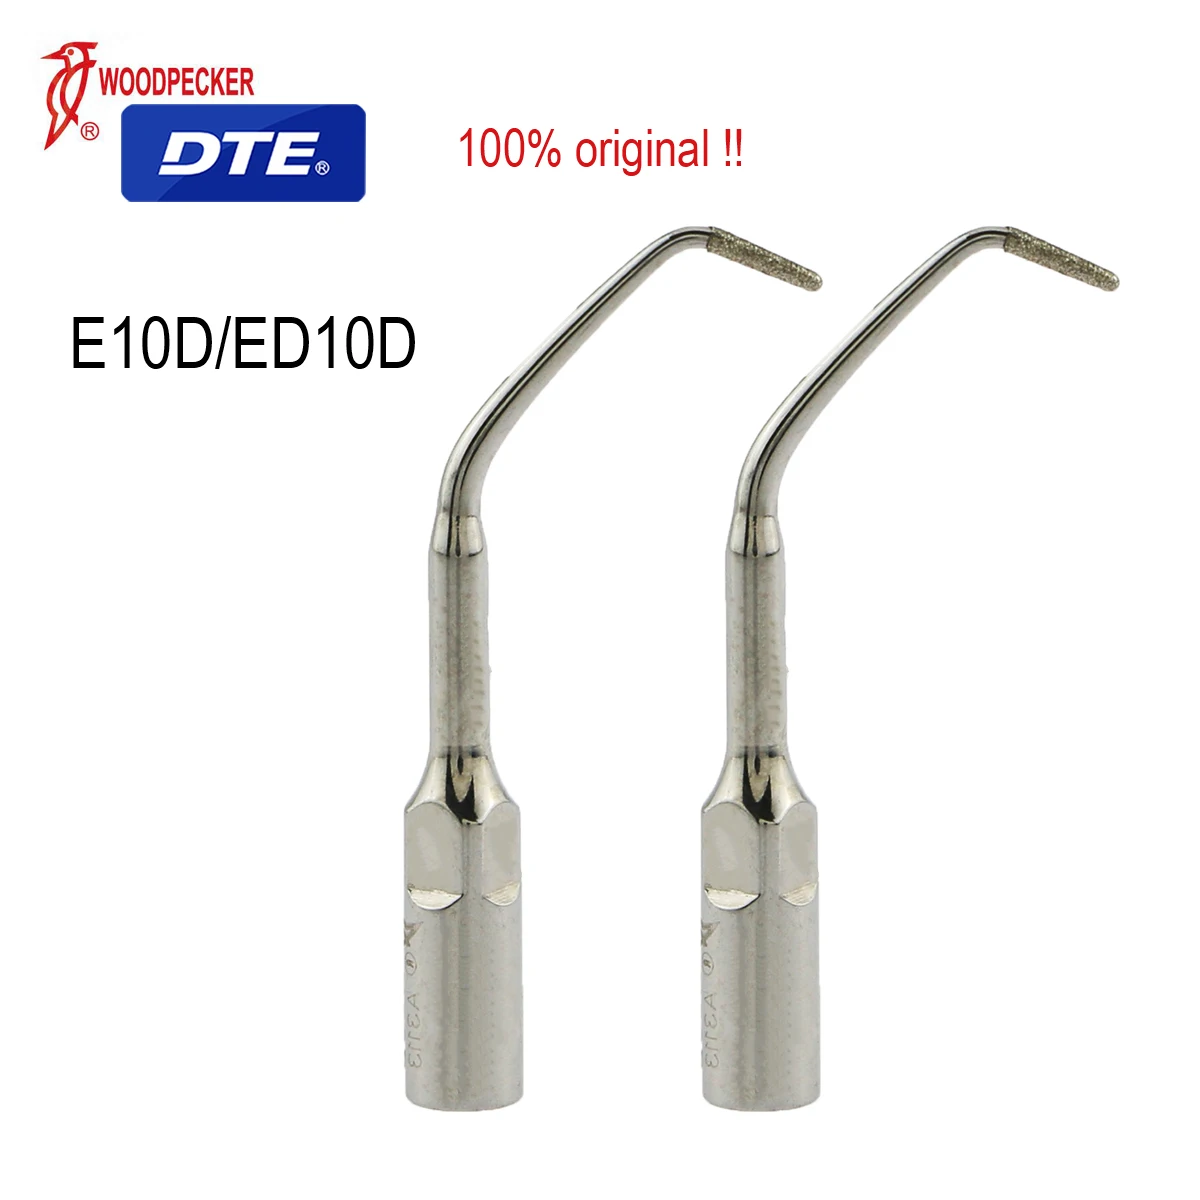 

Woodpecker DTE Dental Ultrasonic Scaler Tips Periodontics Dental Materials E10D ED10D Fit SATELEC DTE NSK Scaler Handpiece